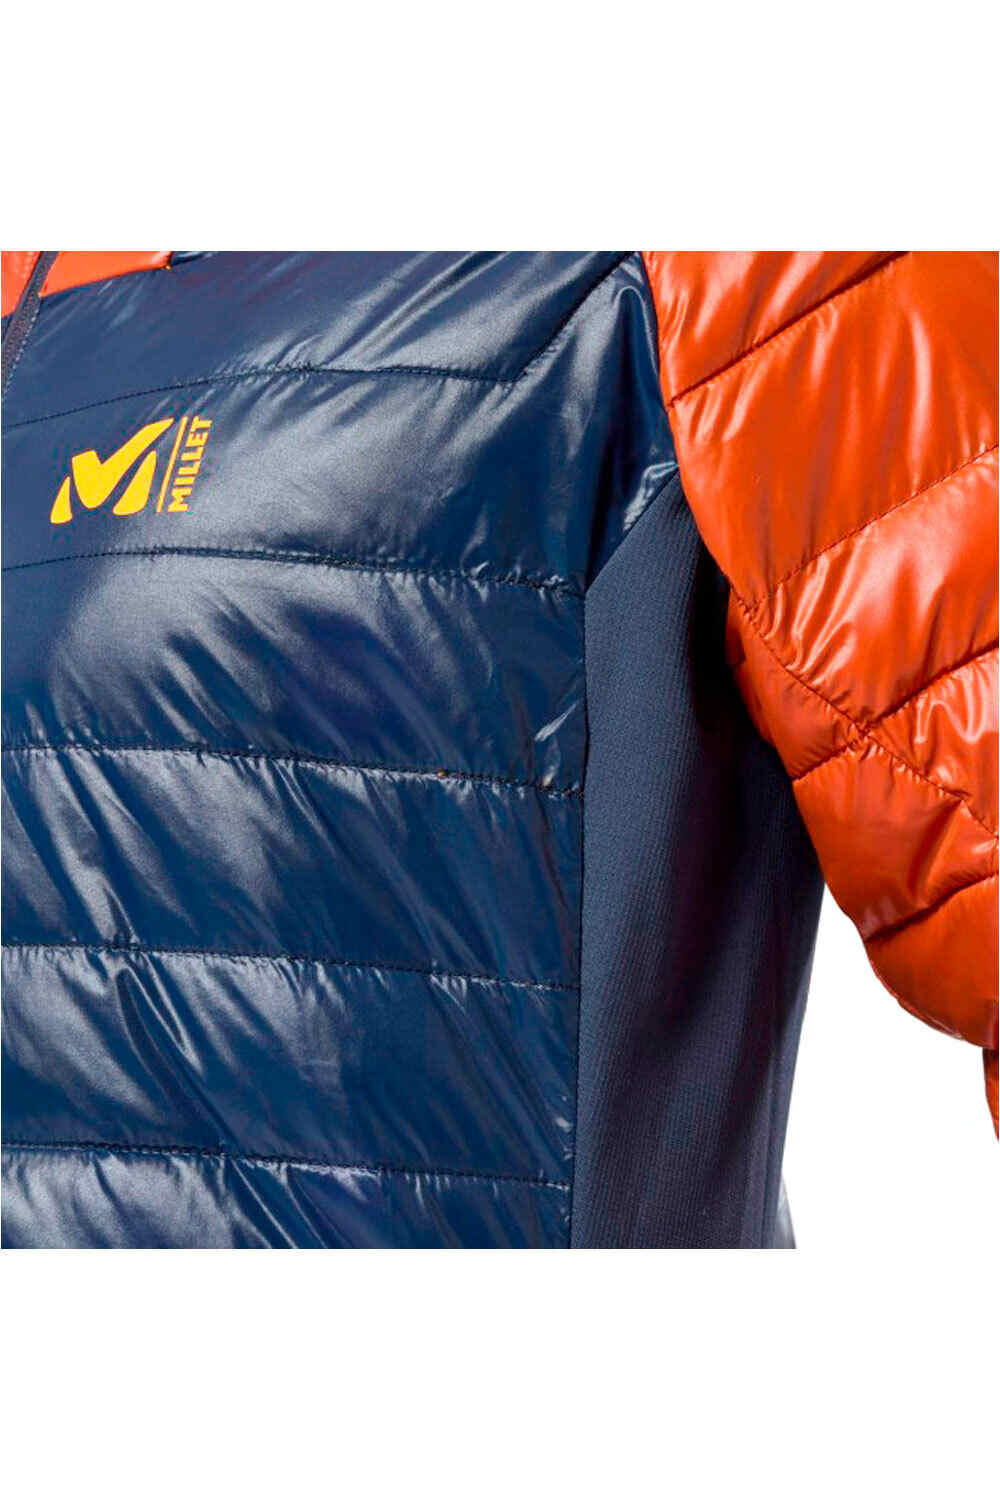 Millet chaqueta outdoor hombre TILICHO HOODIE M 04